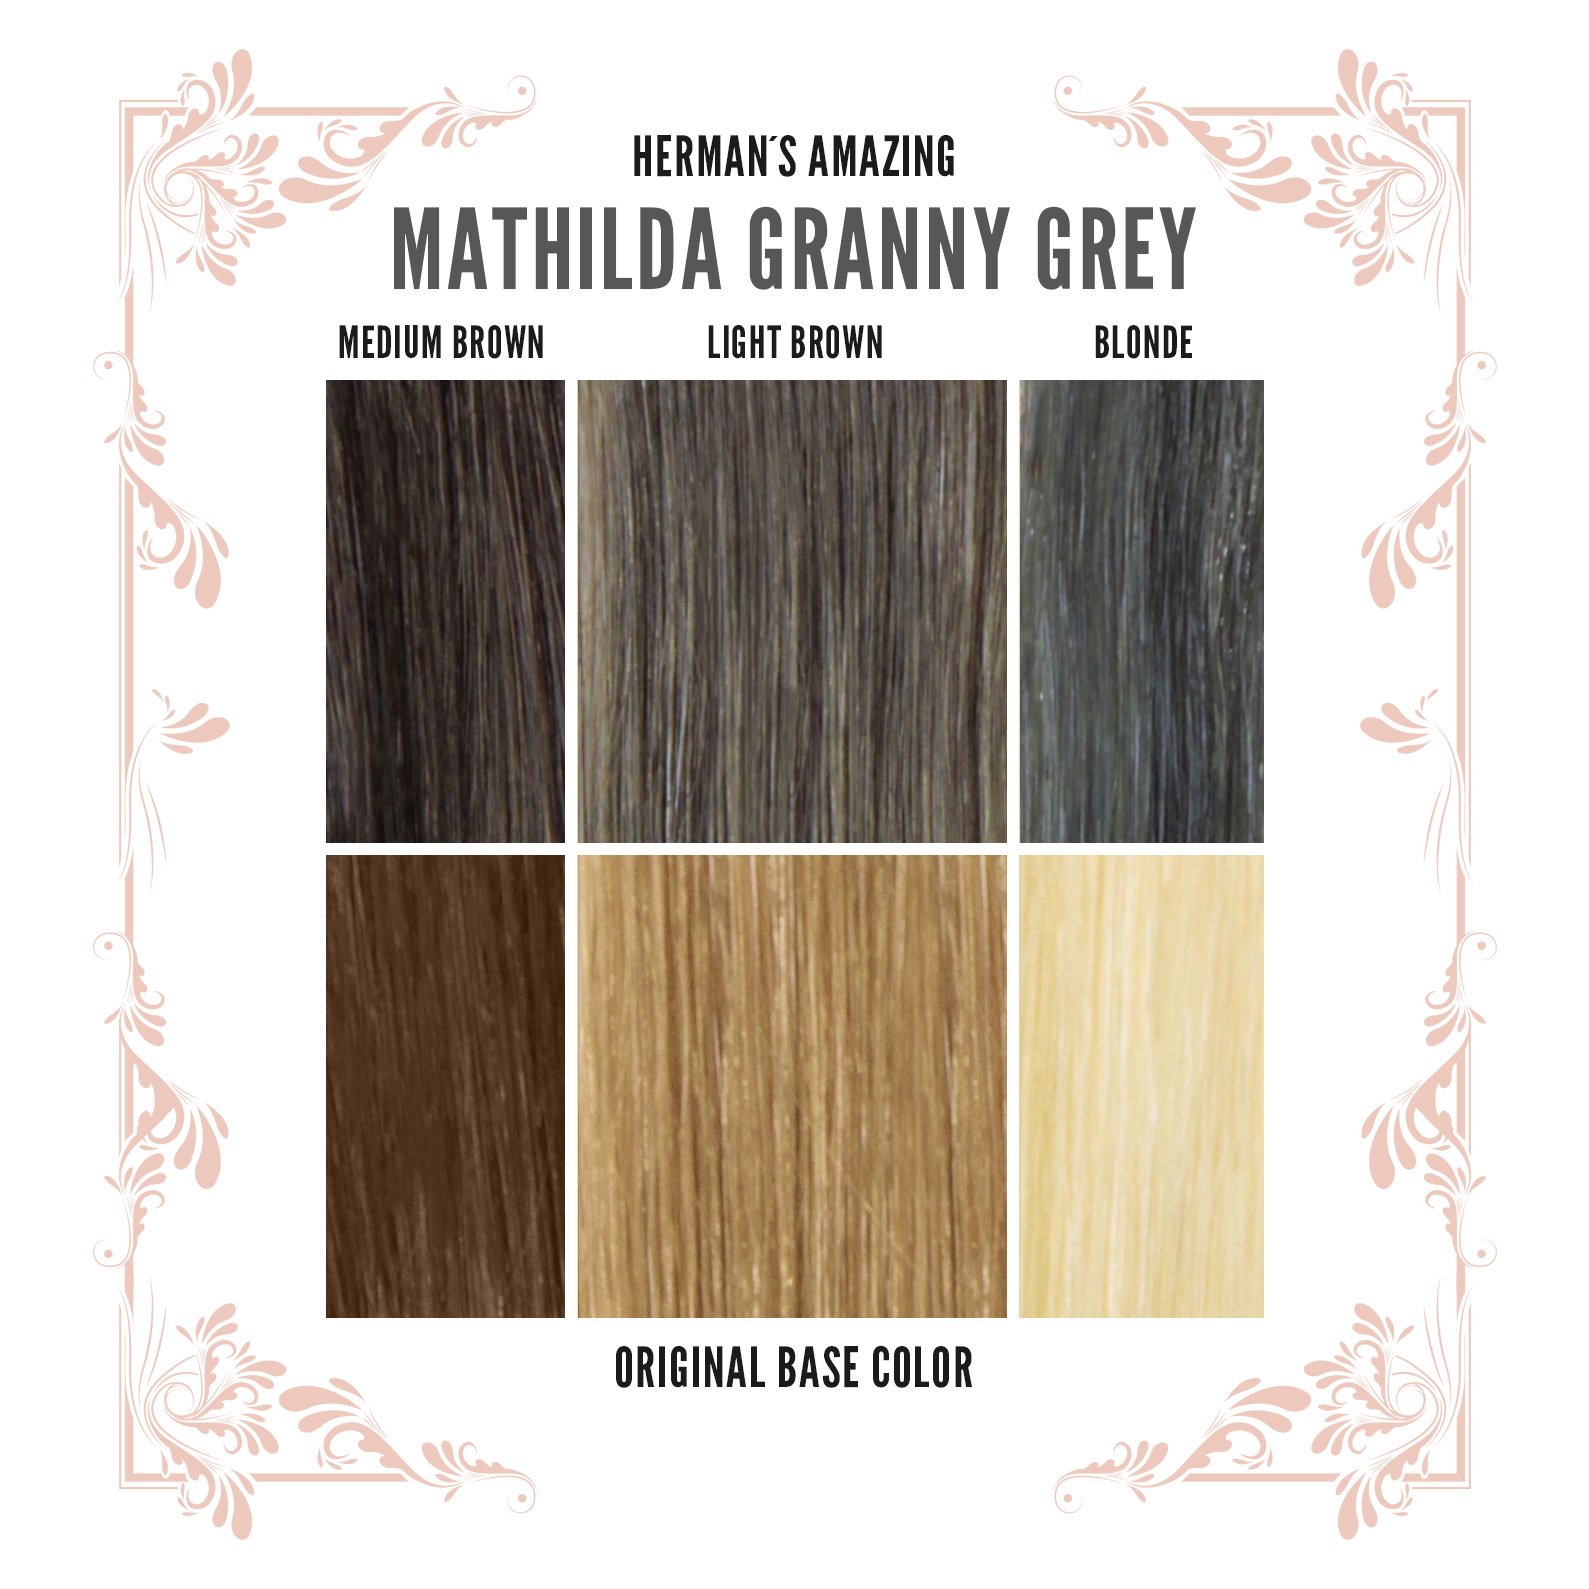 Herman 's Amazing - Mathilda Granny Grey